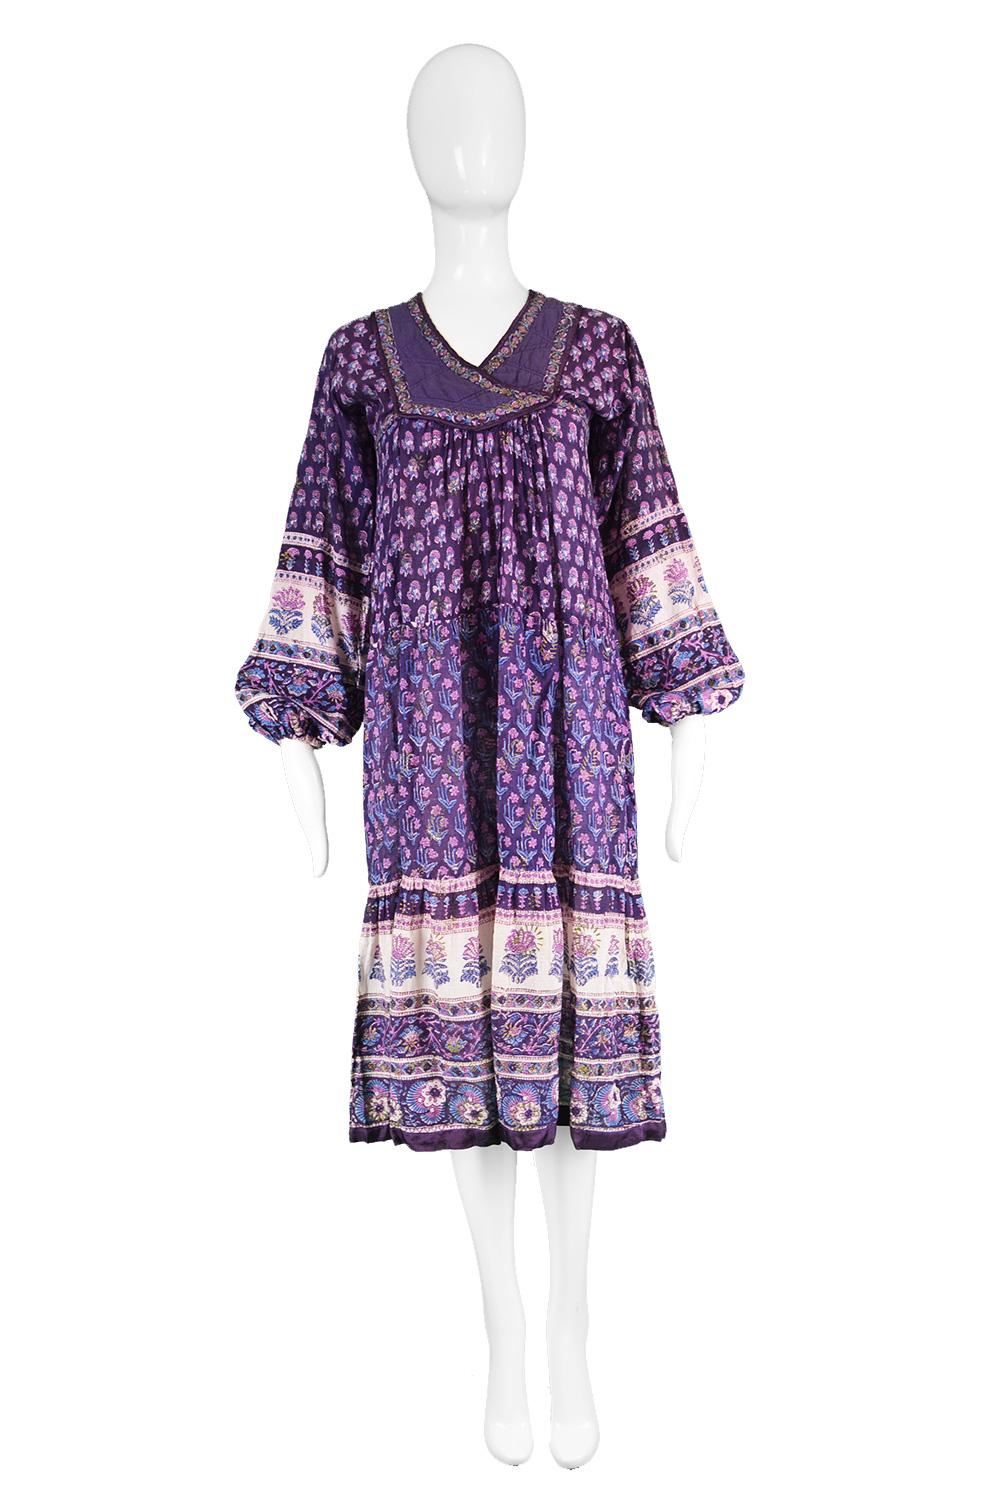 Alpnani Purple Indian Cotton Gauze Block Print Quilted Boho Dress, 1970s

Estimated Size: UK 12/ US 8/ EU 40. Please check measurements.
Bust - 36” / 91cm
Waist - 30” / 76cm
Hips - Free
Length (Shoulder to Hem) - 44” / 112cm
Shoulder to Shoulder -